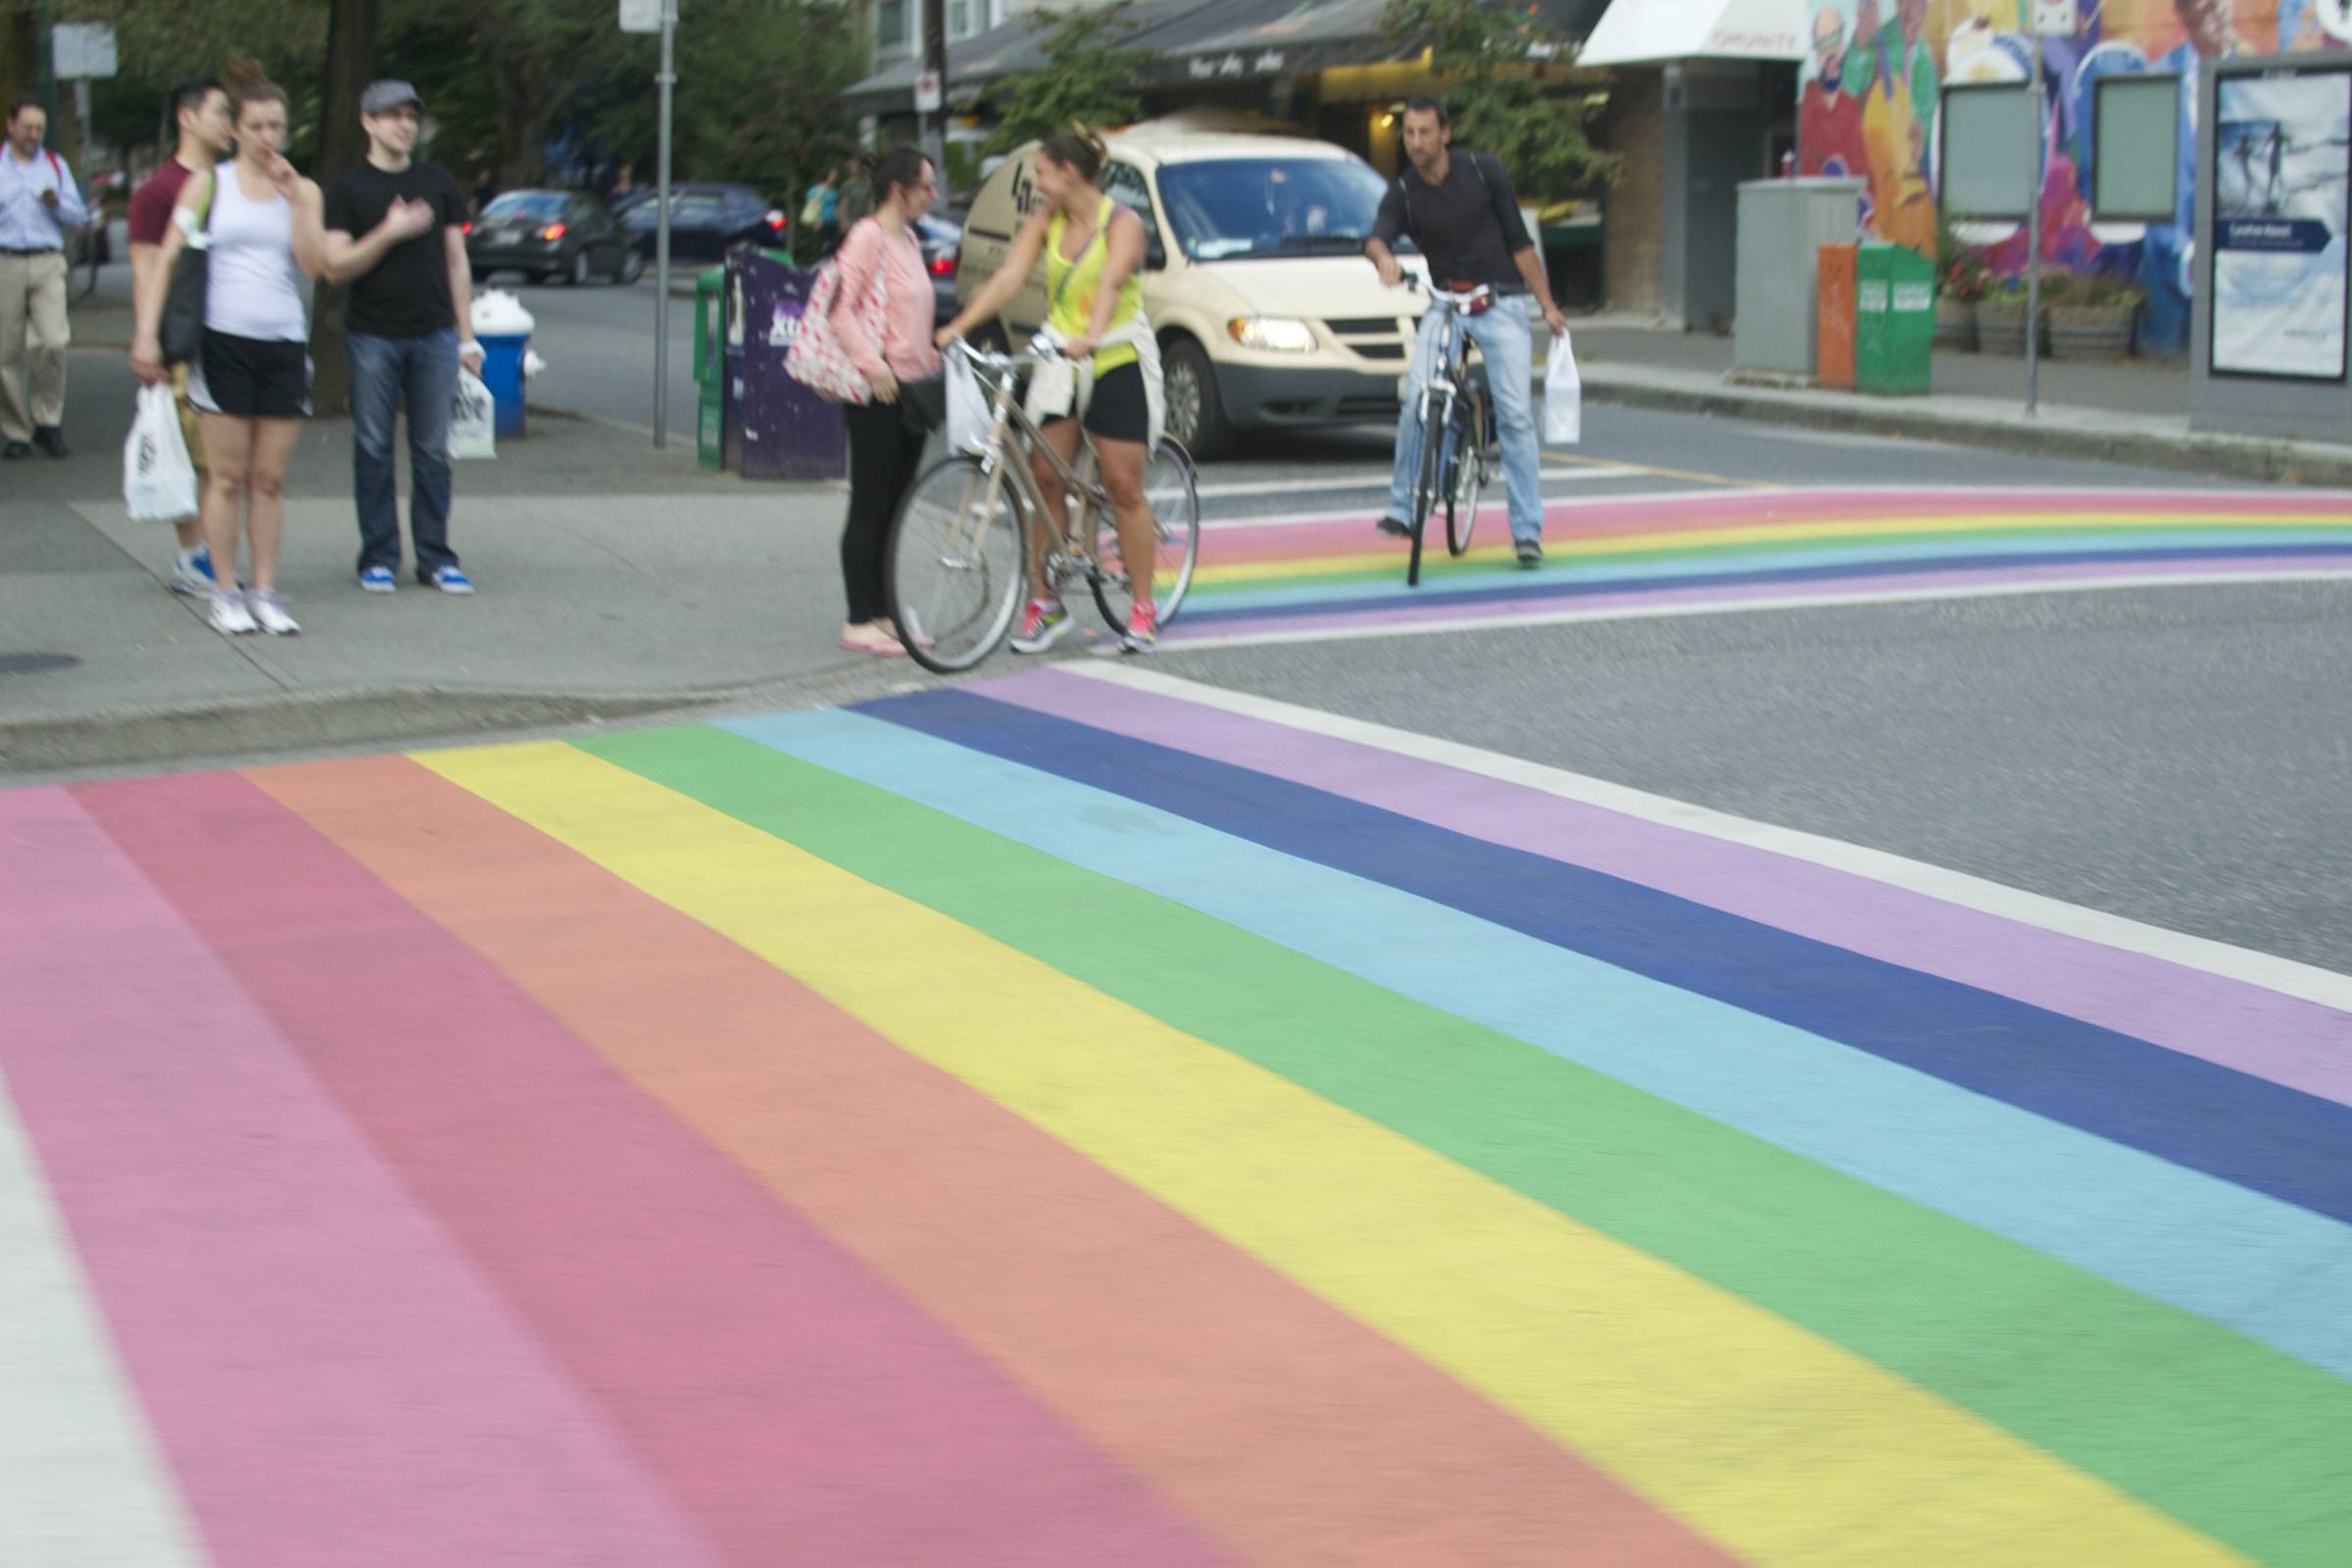 Davie Street has Canada's first permanent rainbow-coloured crosswalk, I approve!